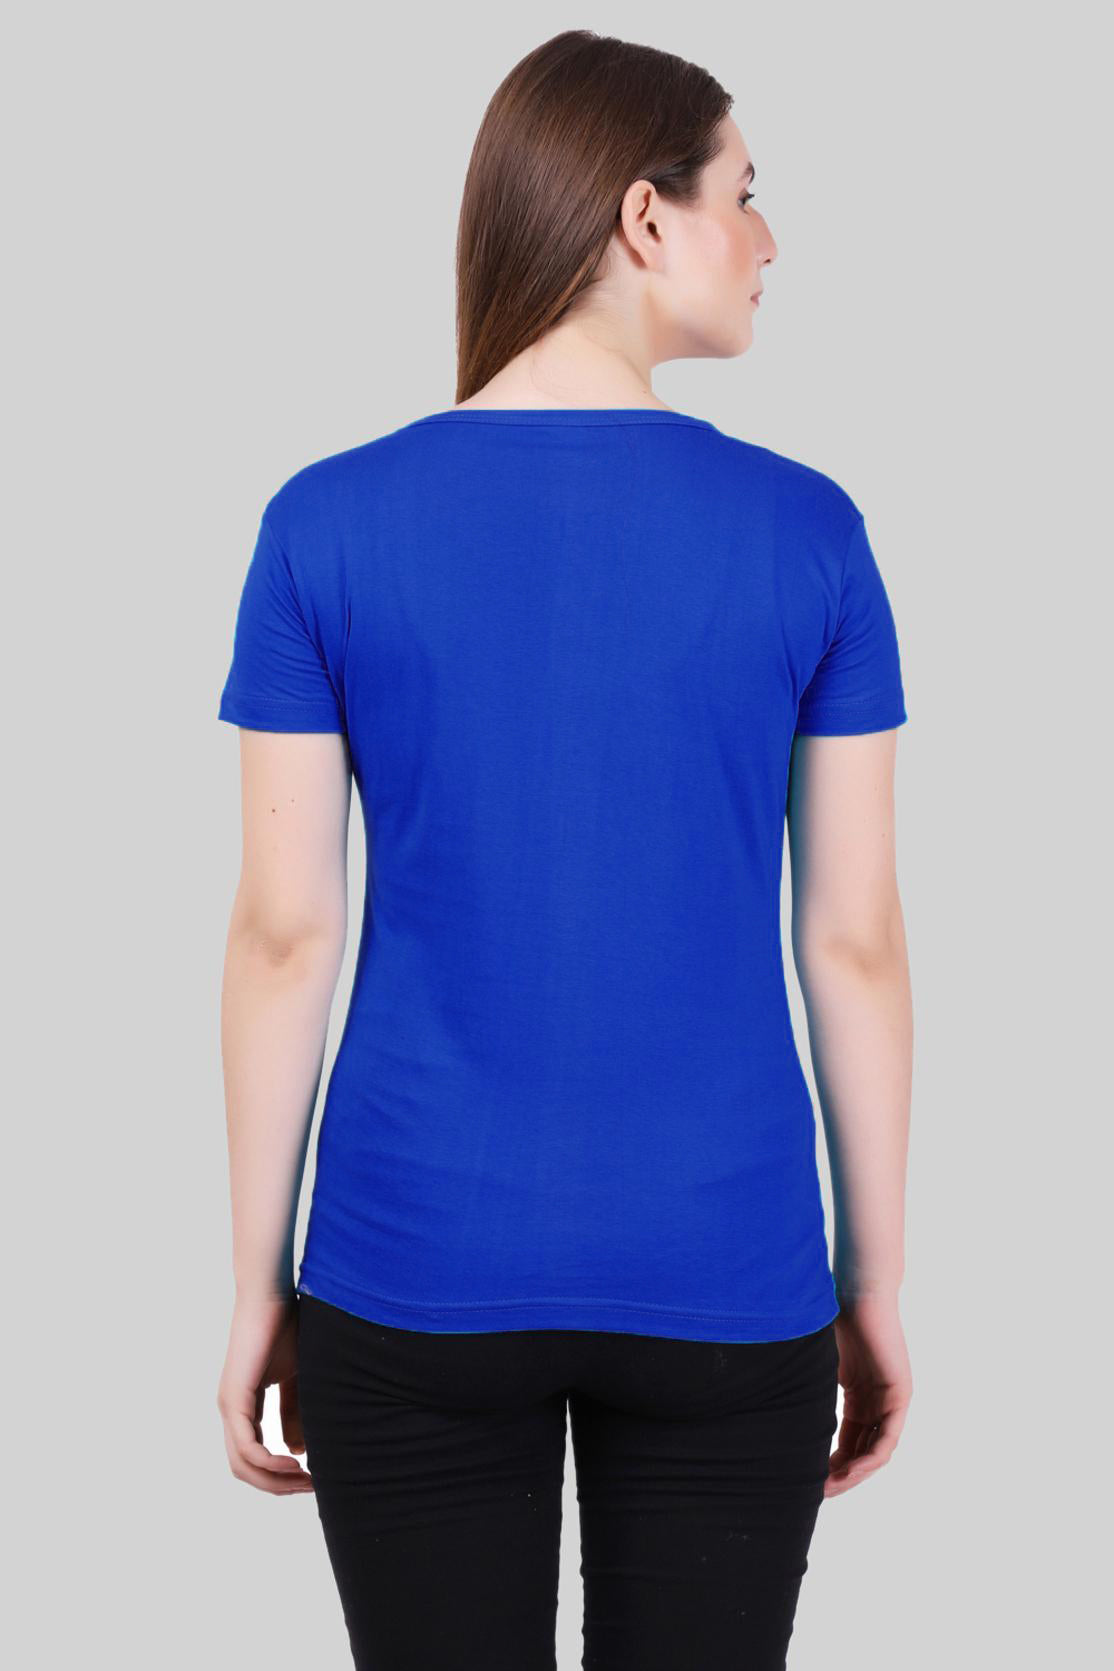 Basic Royal Blue V-Neck T-Shirt